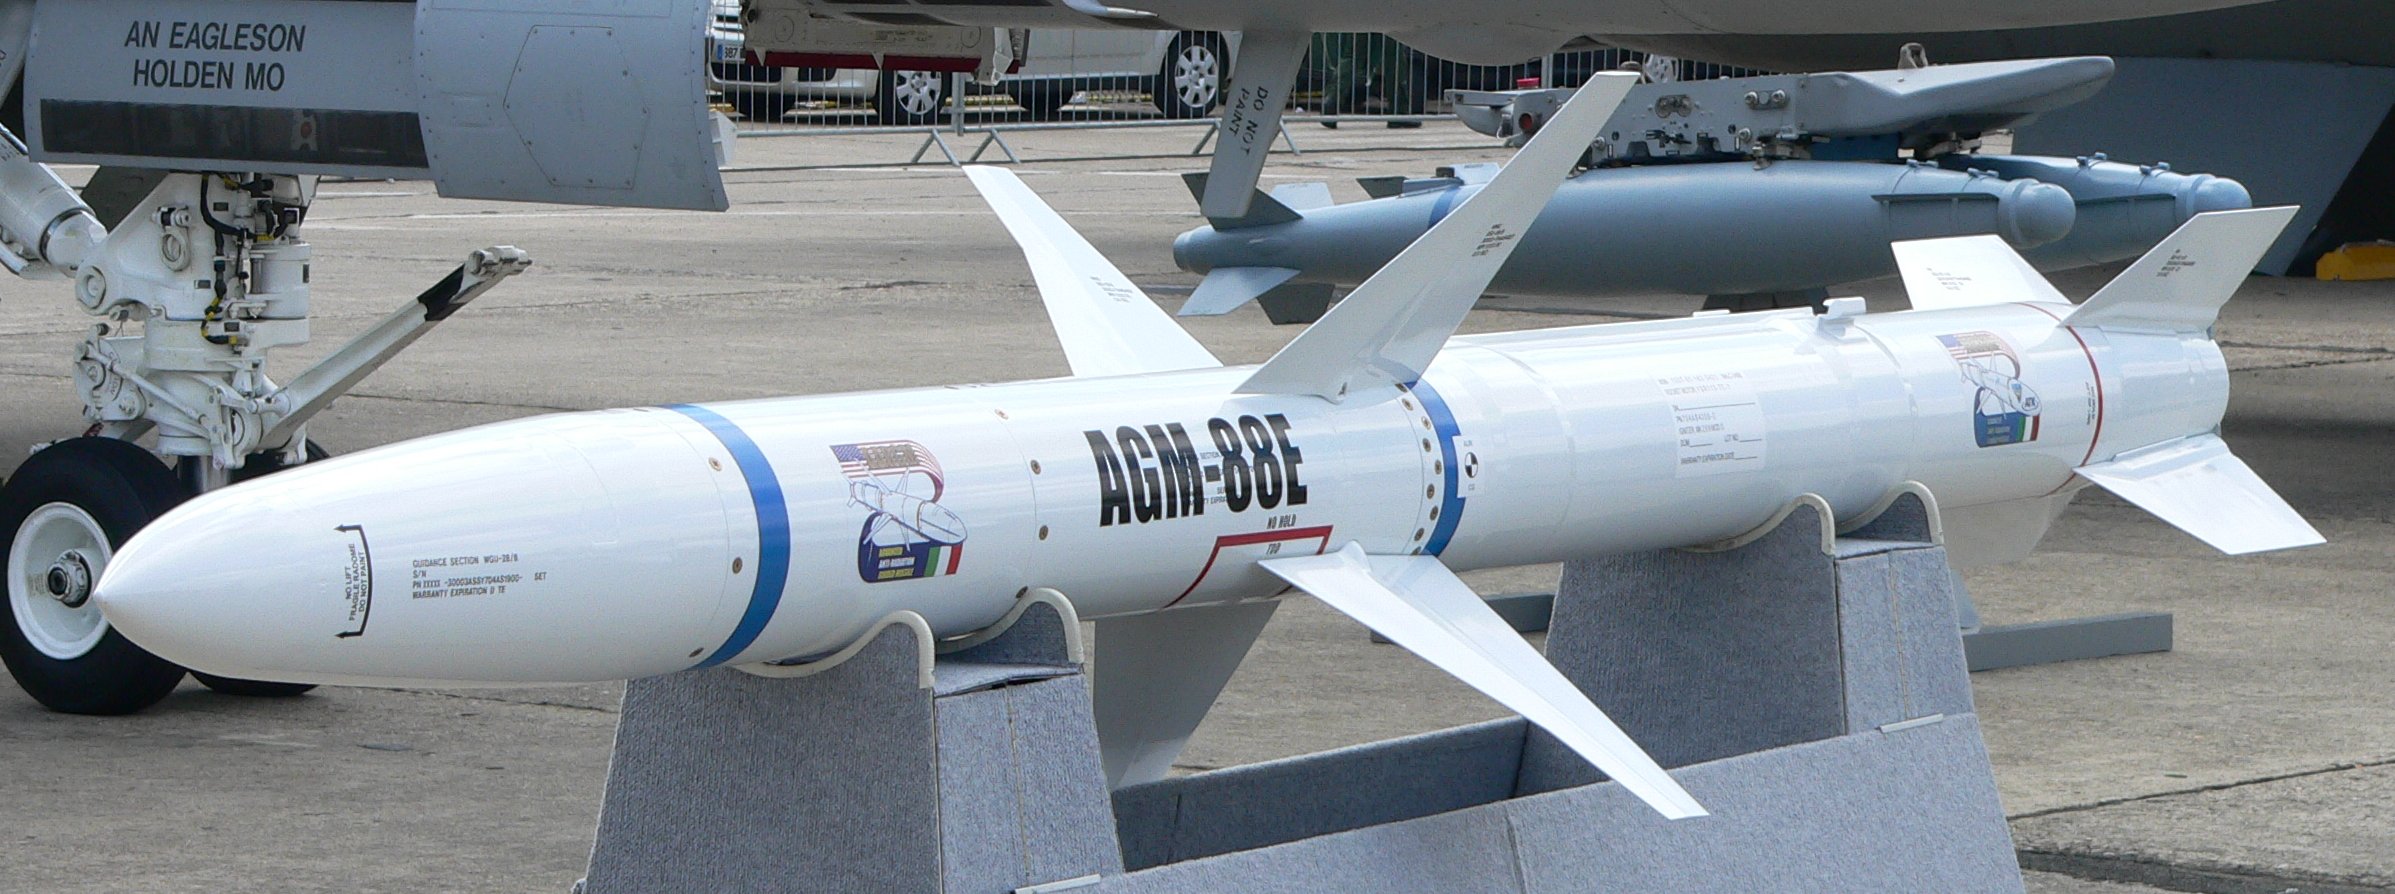 AGM-88 HARM - Wikipedia